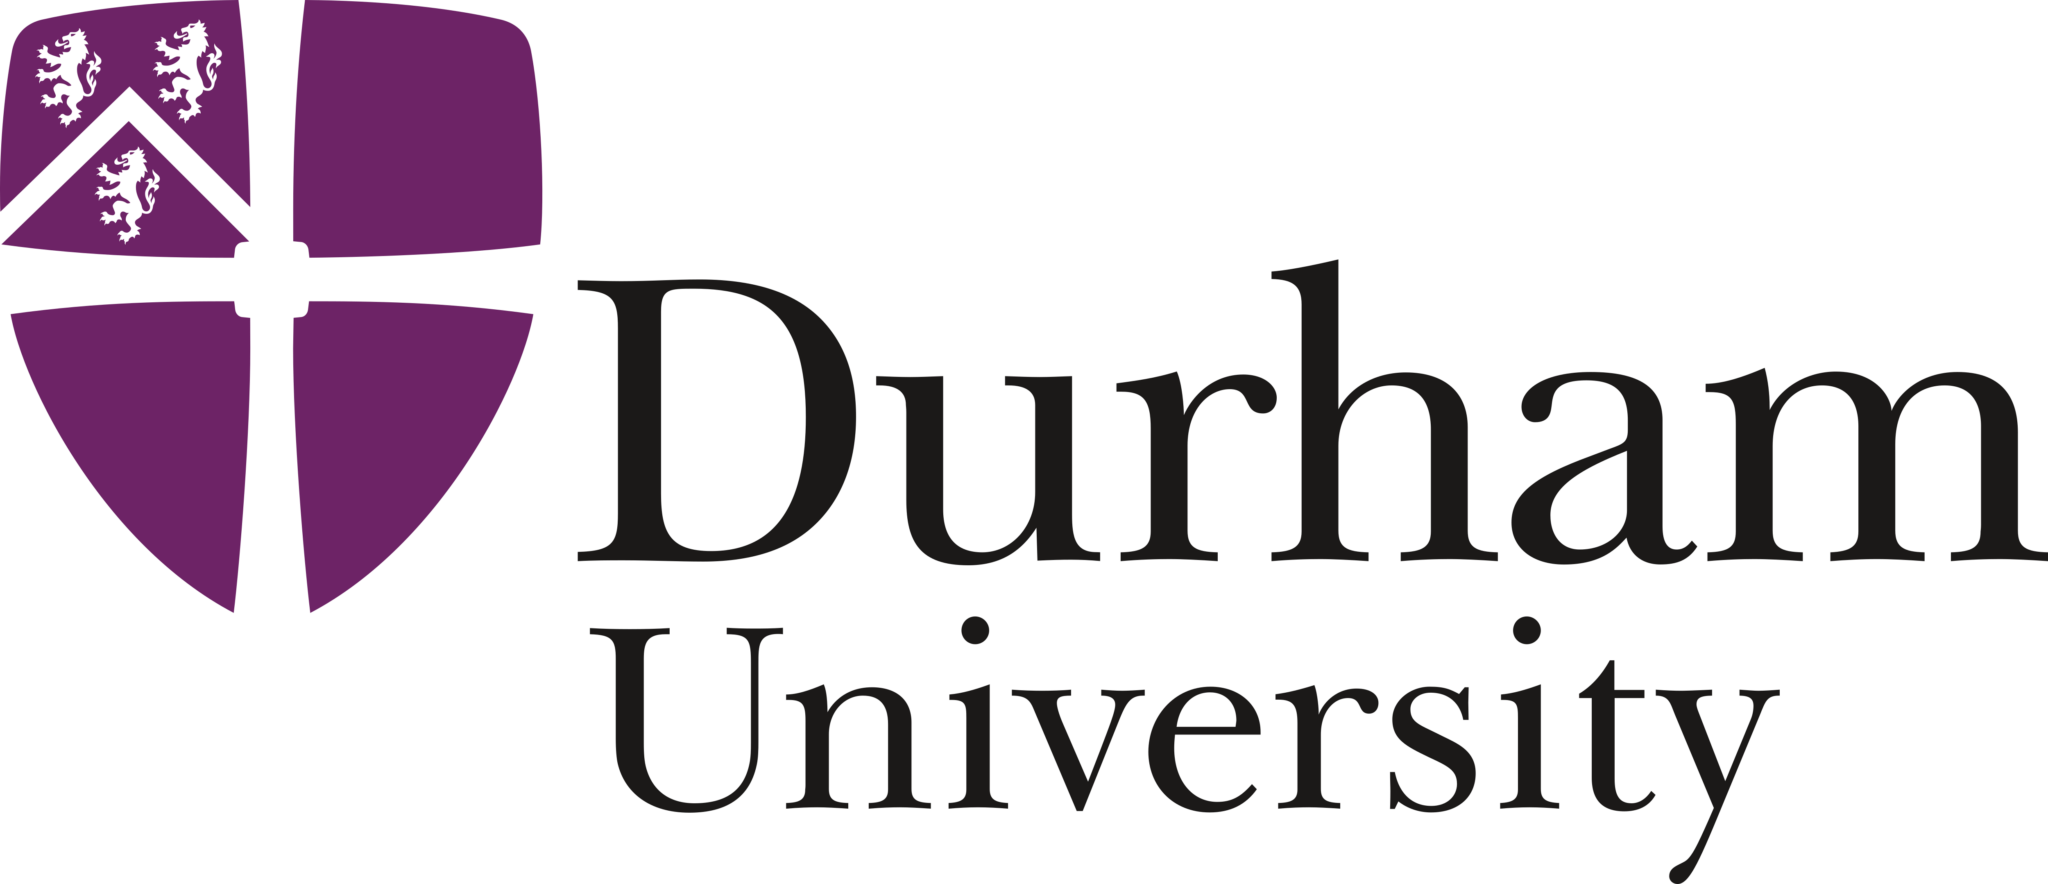 Durham University